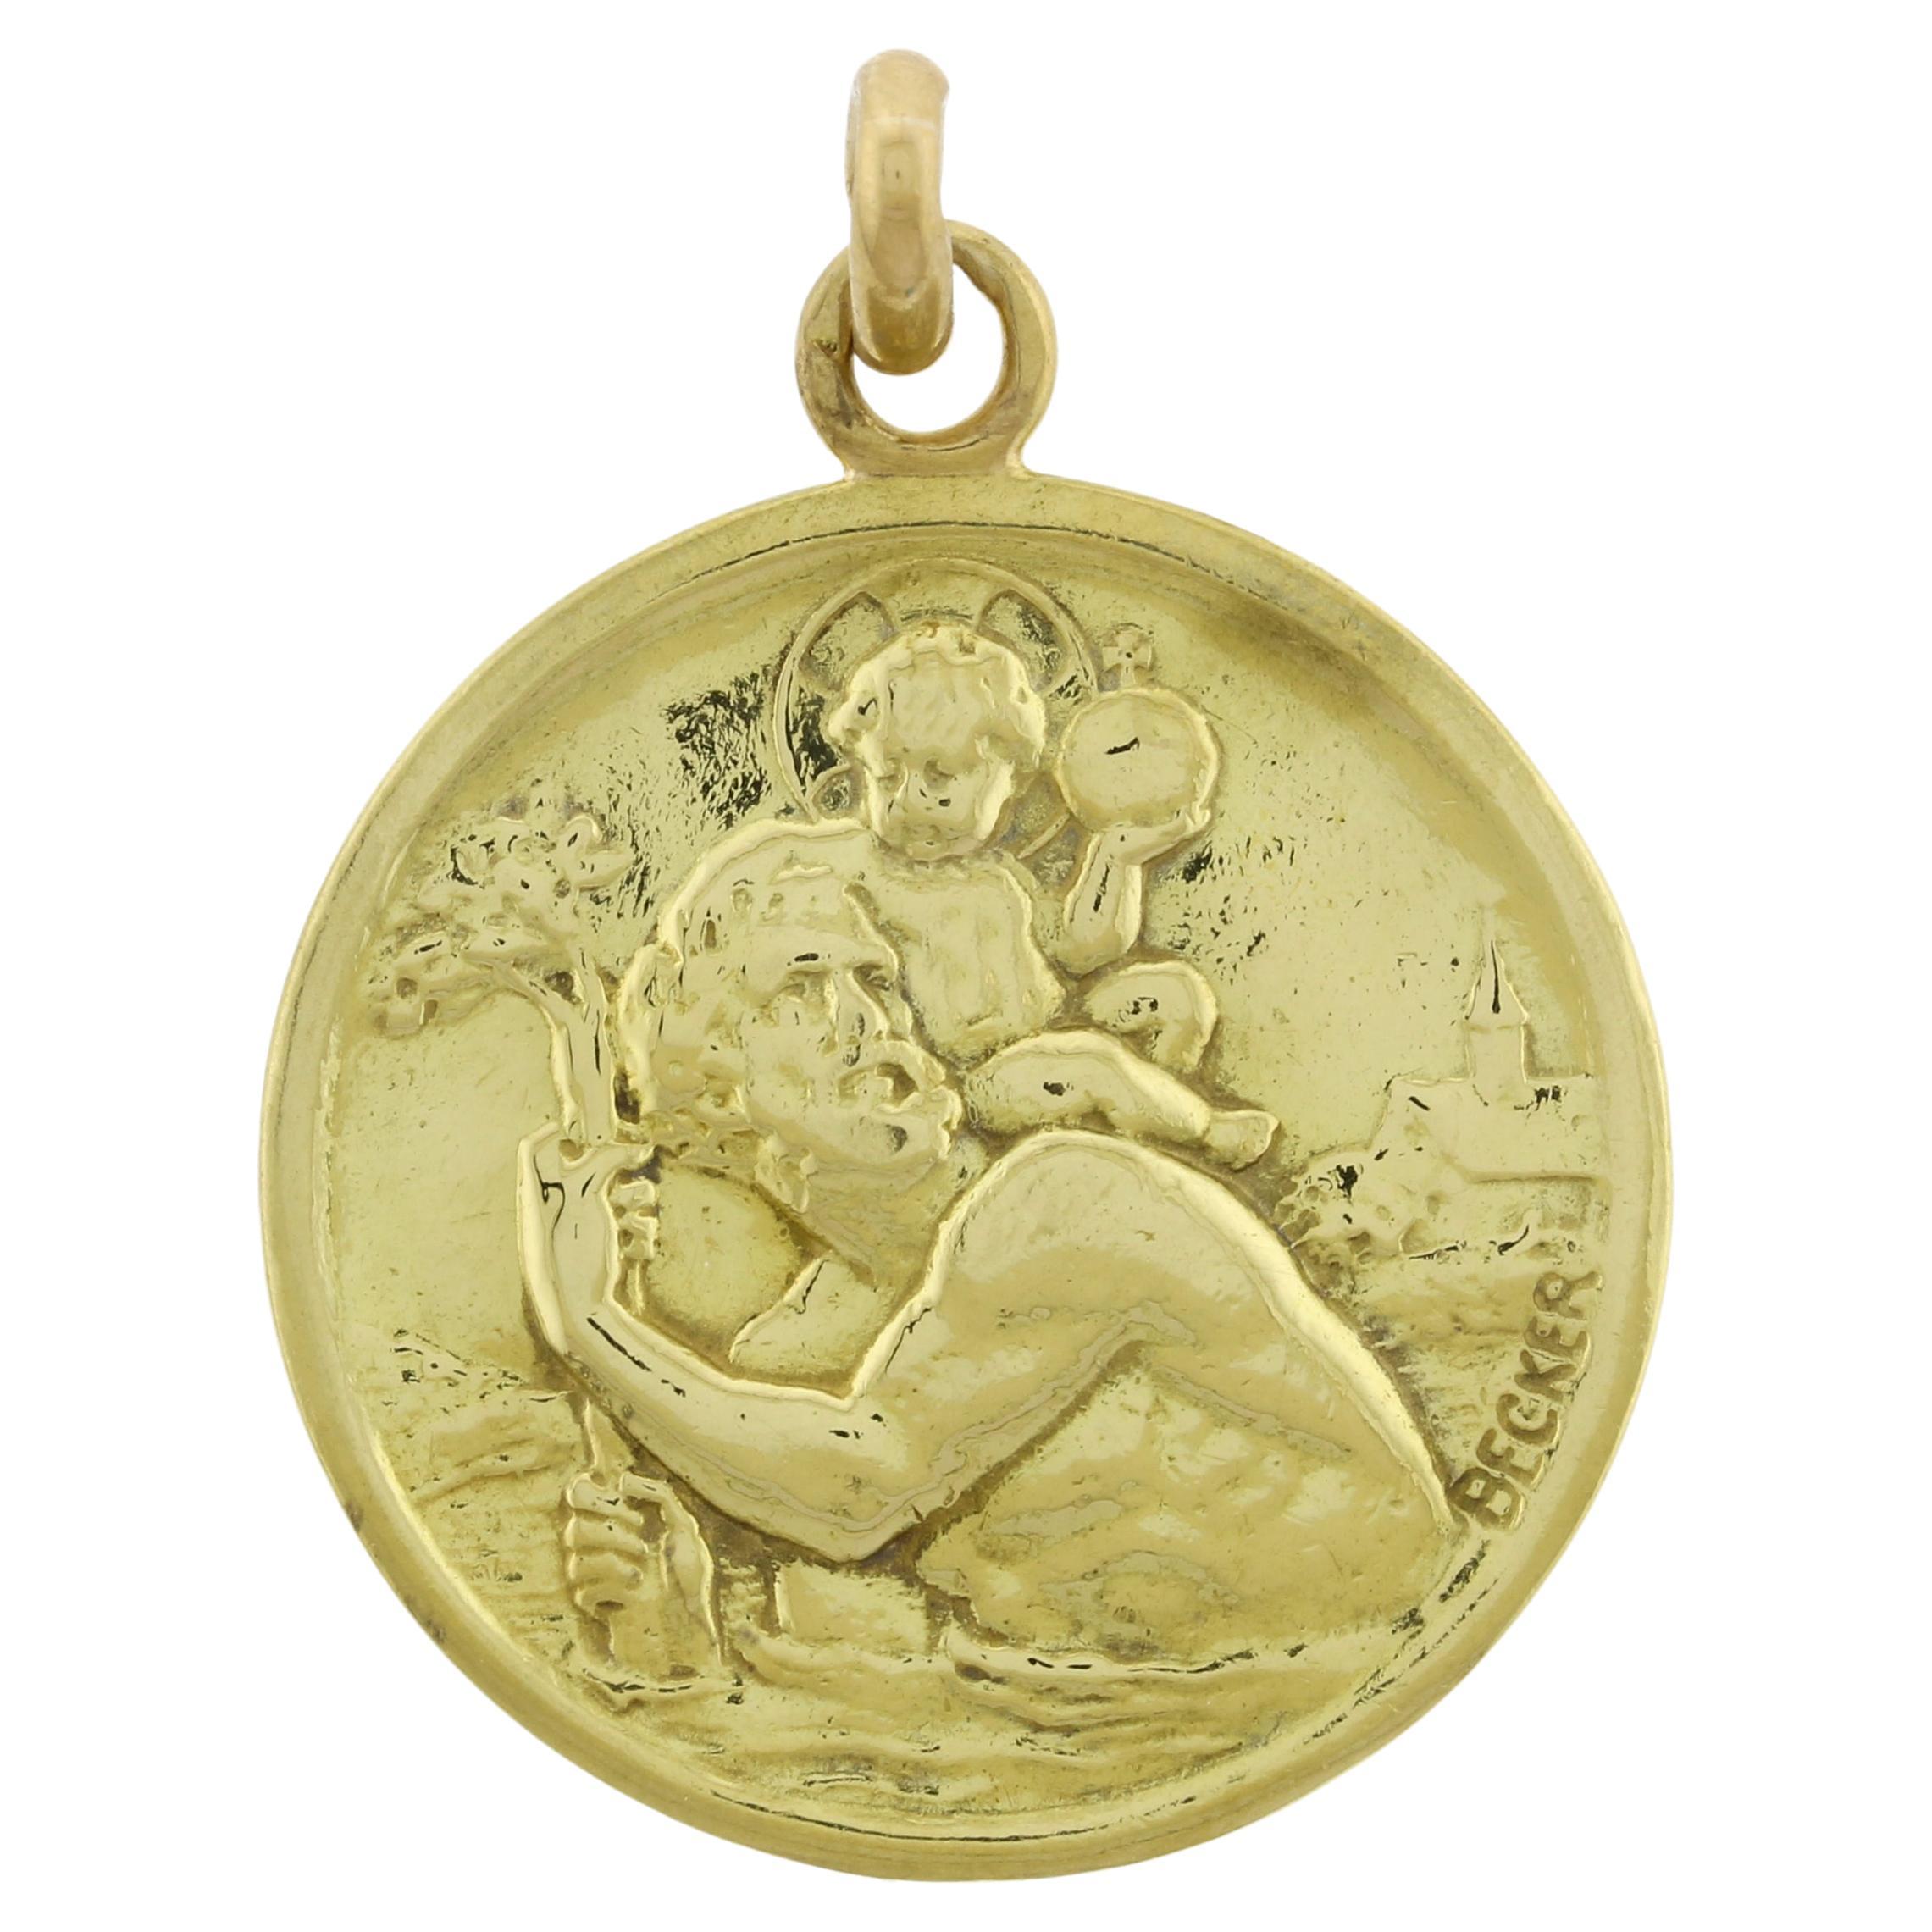 St. Christopher Medal by Edmond-Henri Becker